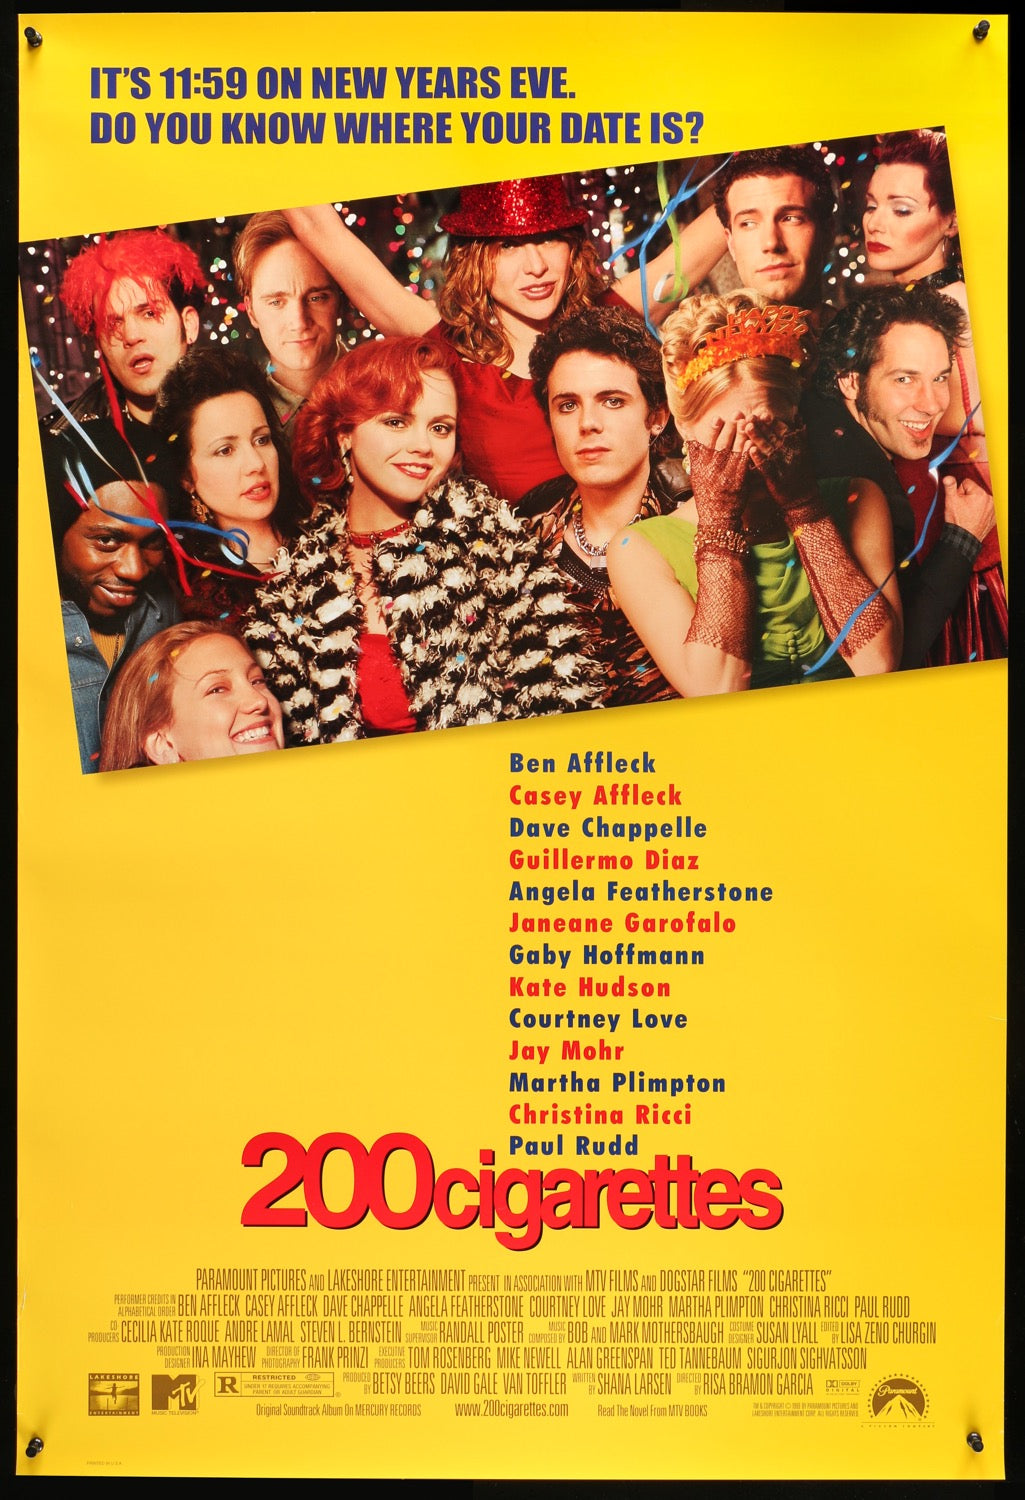 200 Cigarettes (1999) original movie poster for sale at Original Film Art